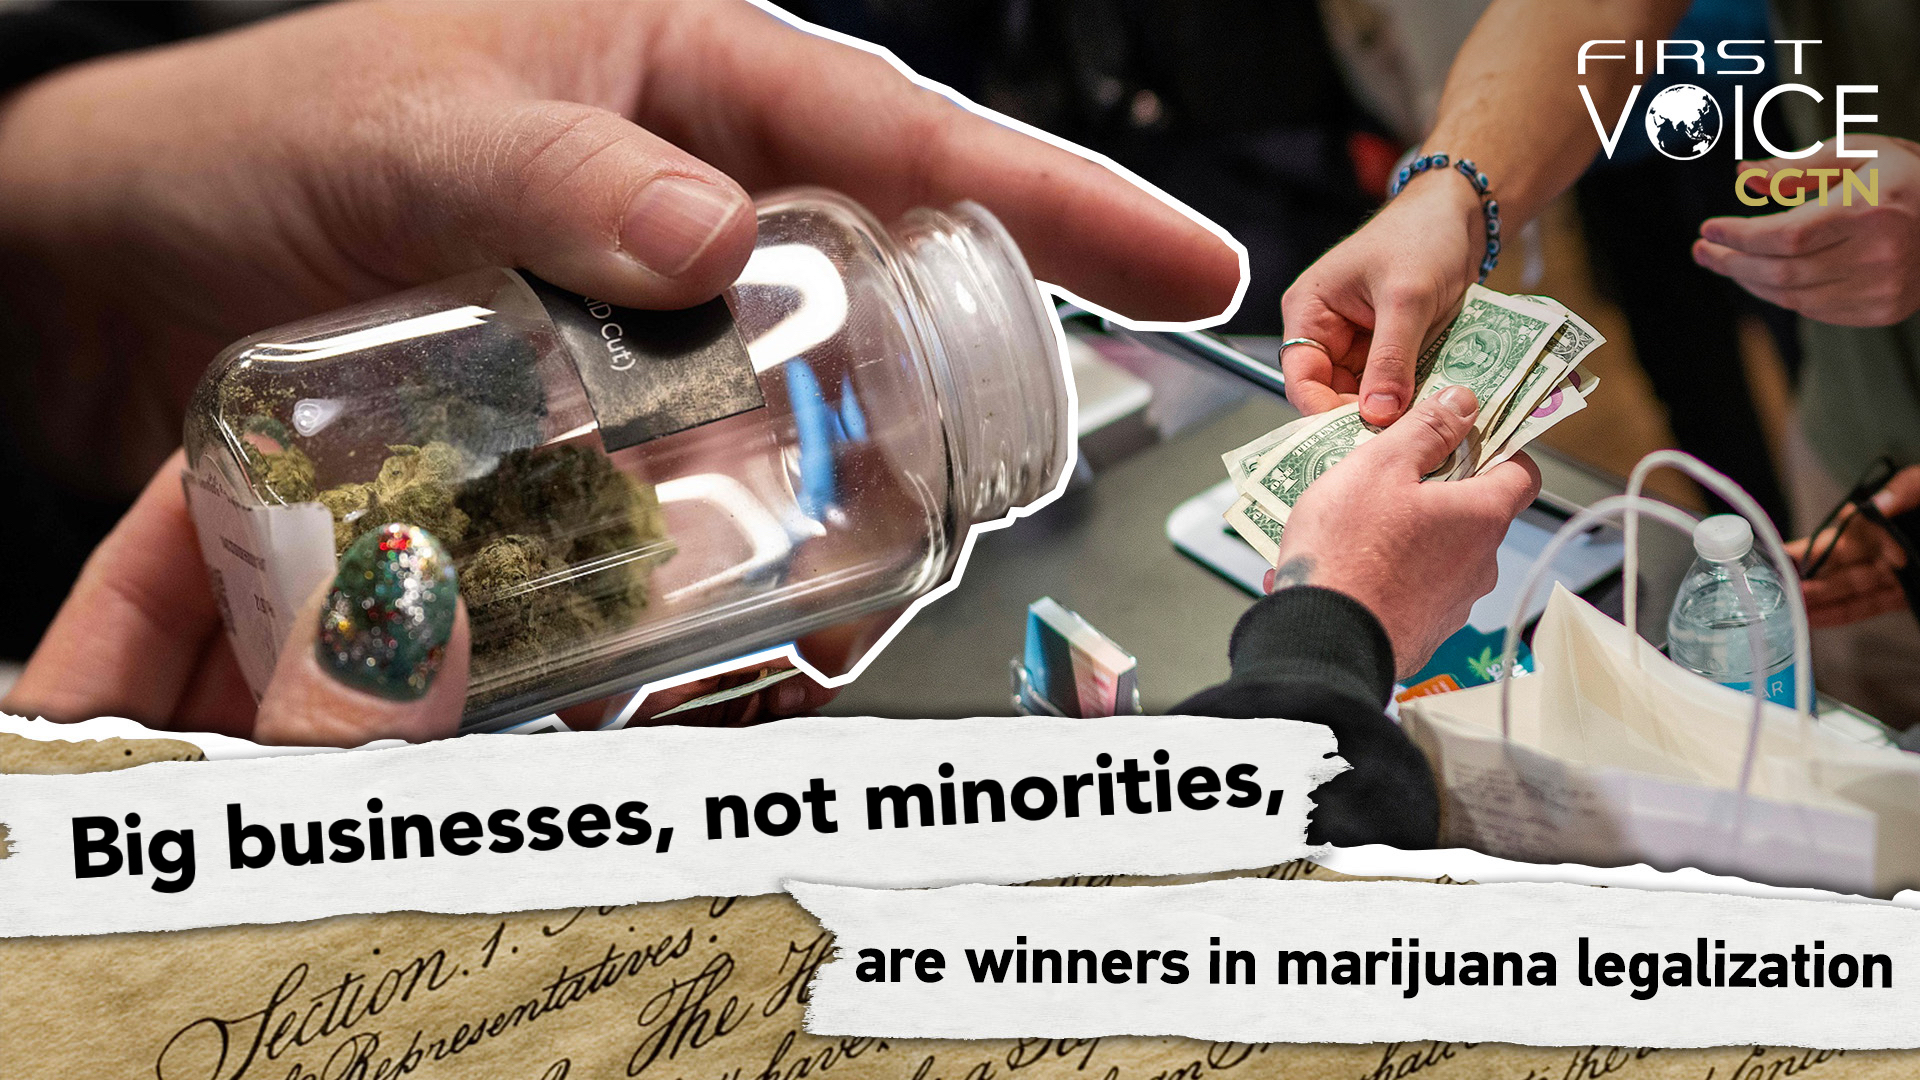 Big businesses, not minorities, are winners in marijuana legalization